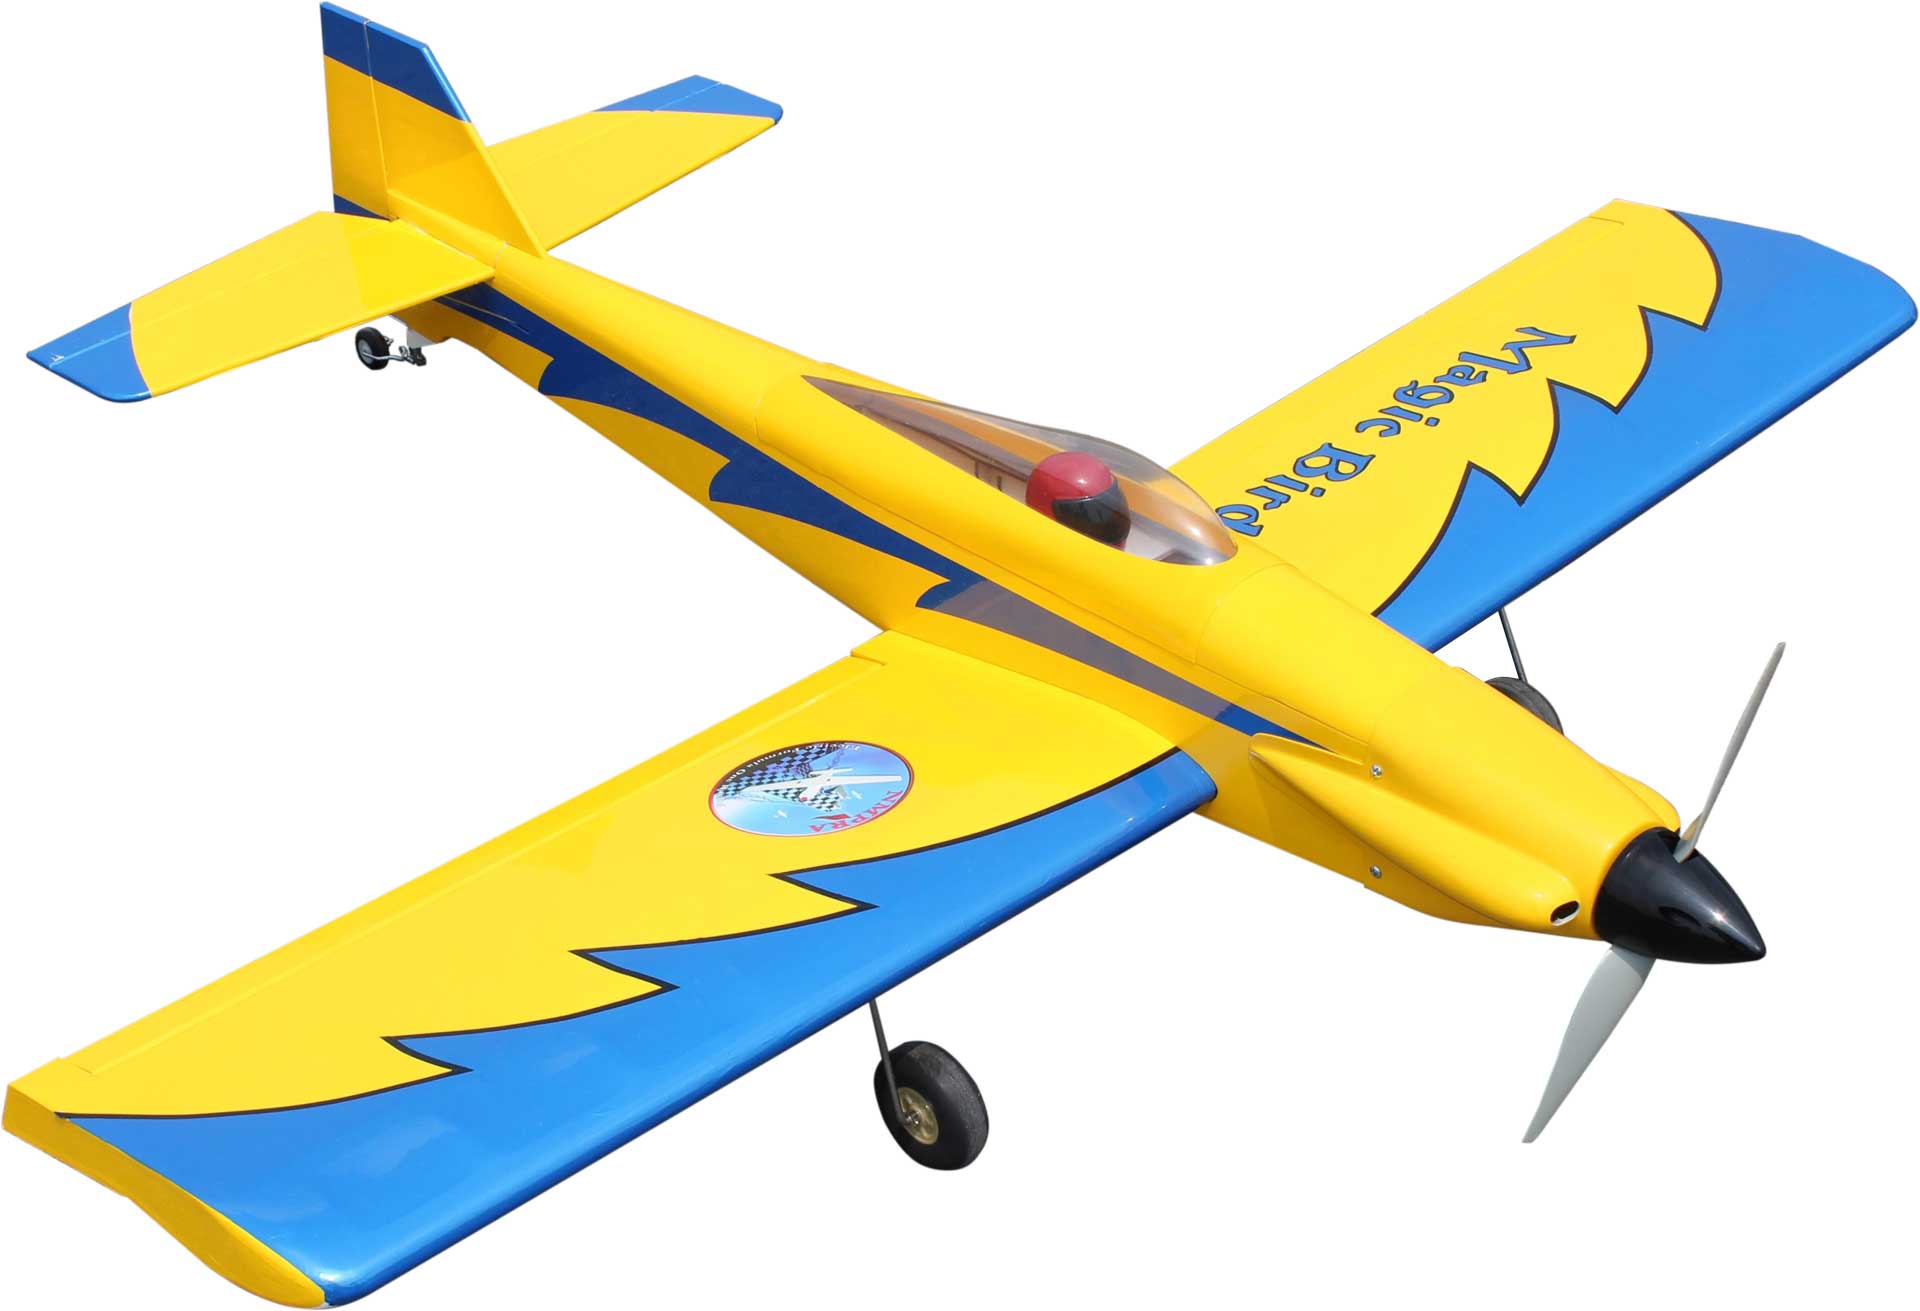 Seagull Models ( SG-Models ) Magic Bird 40e 46" PNP Pylon Racing Modèle ARF, avec propulsion Dualsky, jaune/bleu